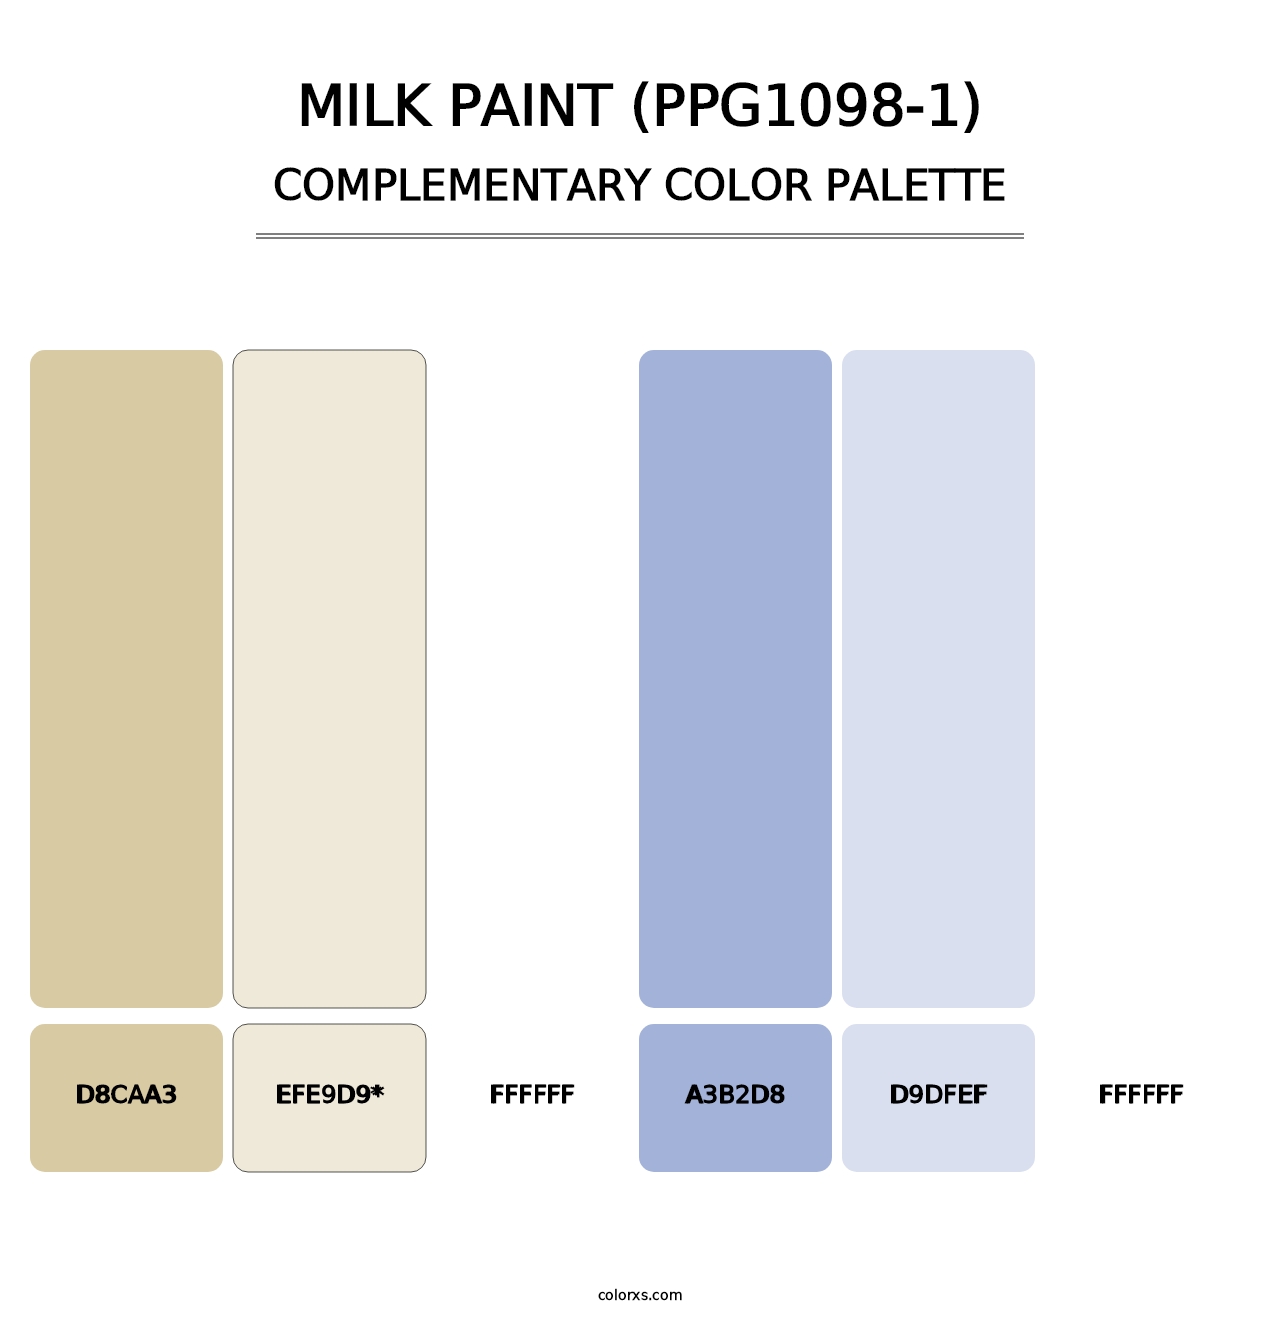 Milk Paint (PPG1098-1) - Complementary Color Palette